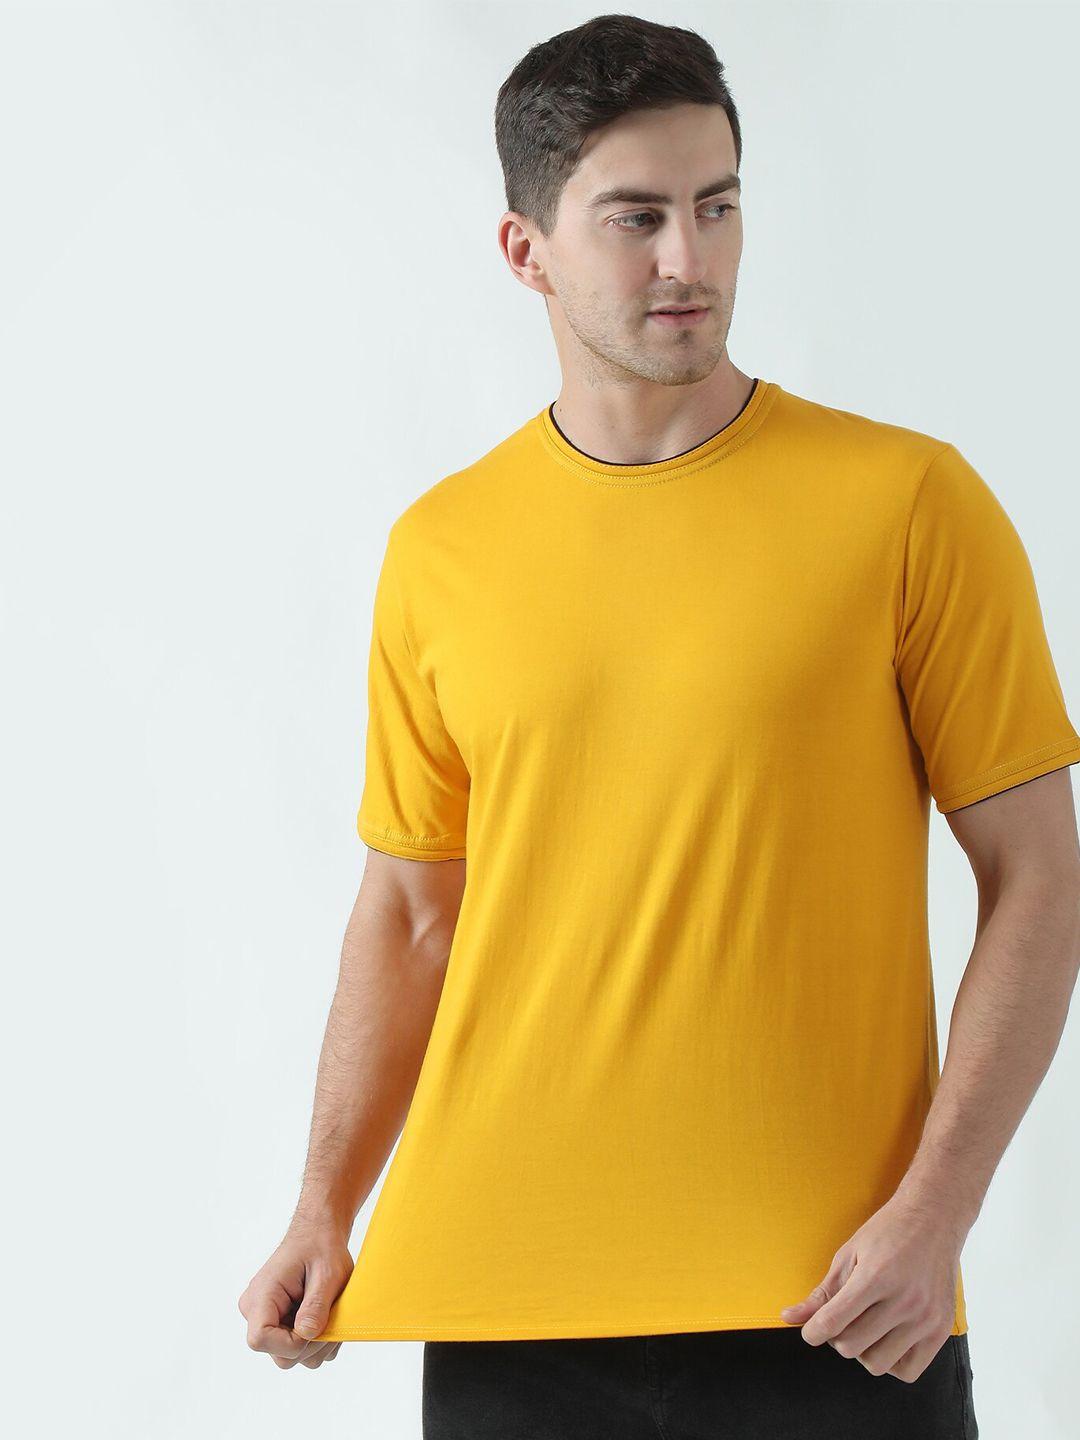 the-eg-store-men-cotton-t-shirt